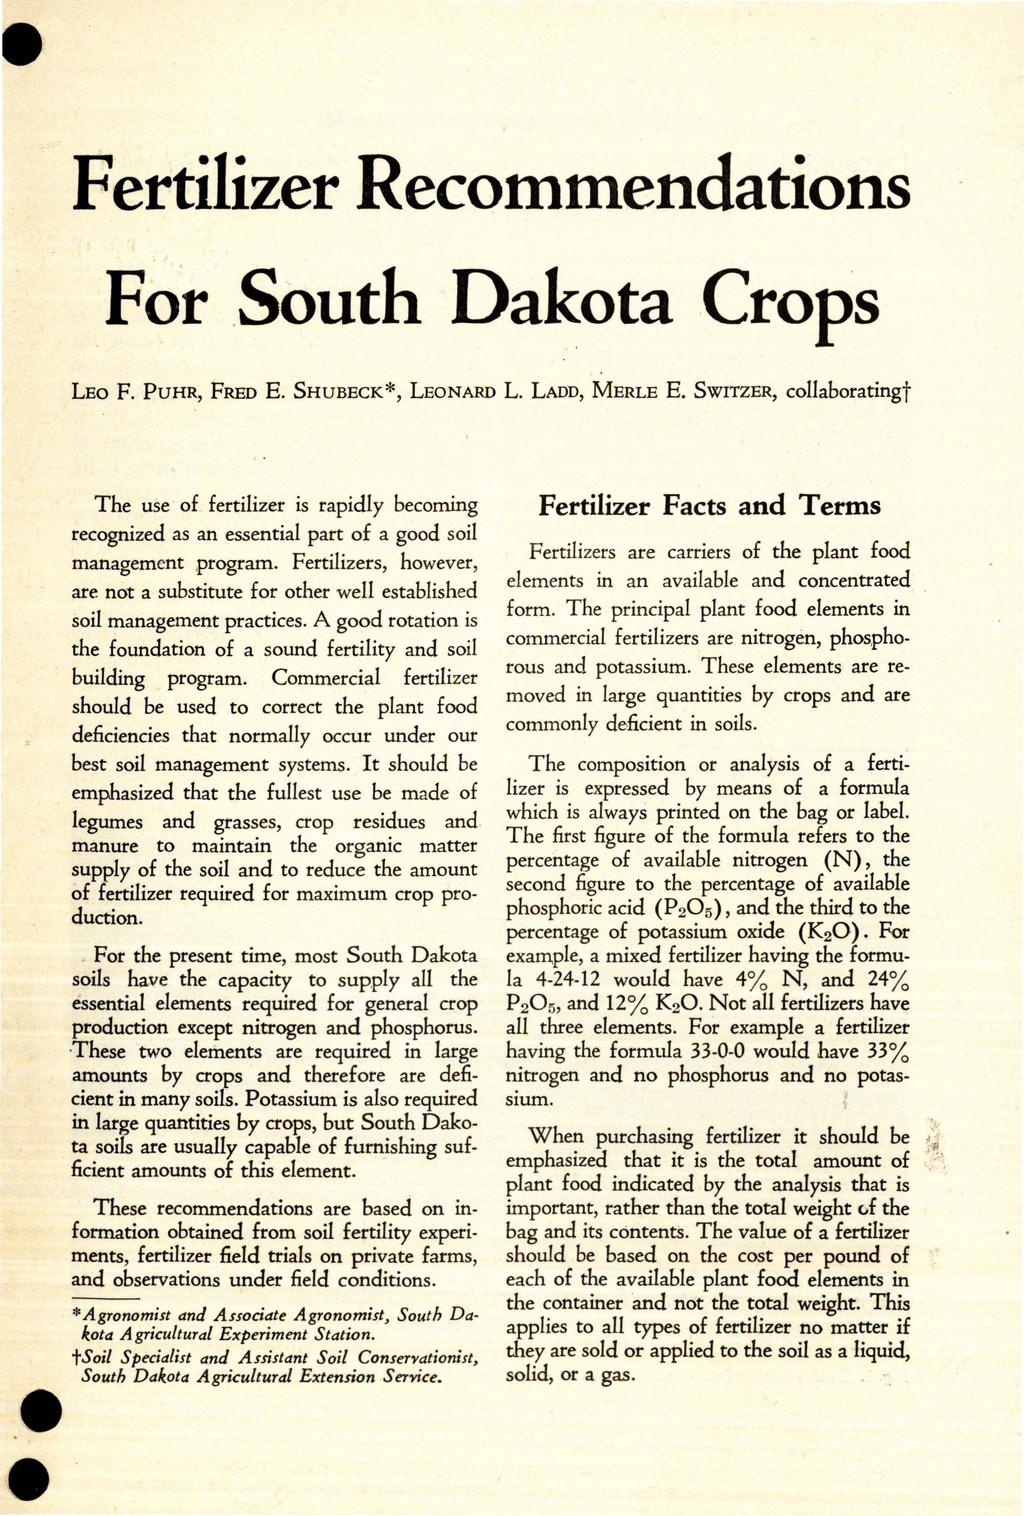 Fertilizer Recommendations. For South Dakota Crops LEo F. PUHR, FREDE. SHUBECK*, LEONARD L. LADD, MERLE E.